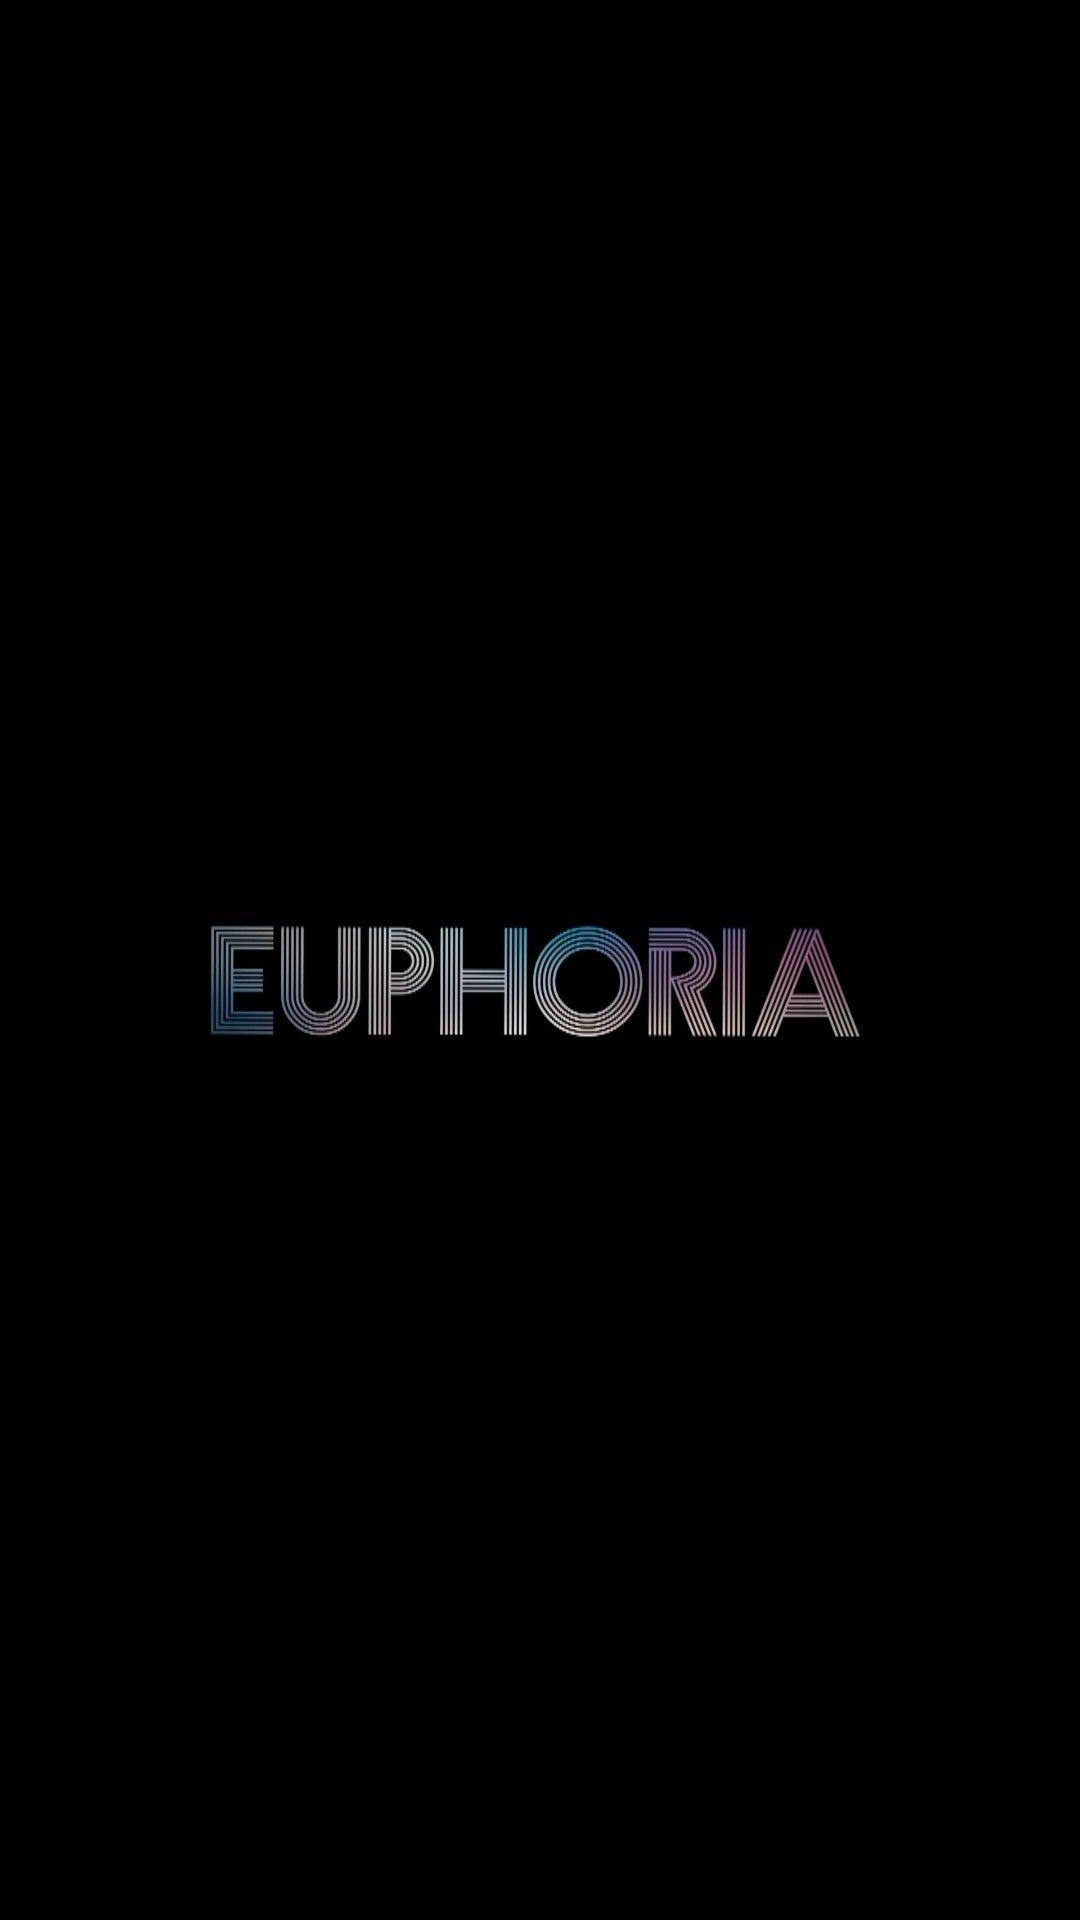 Euphoria Hbo Wallpapers Wallpaper Cave